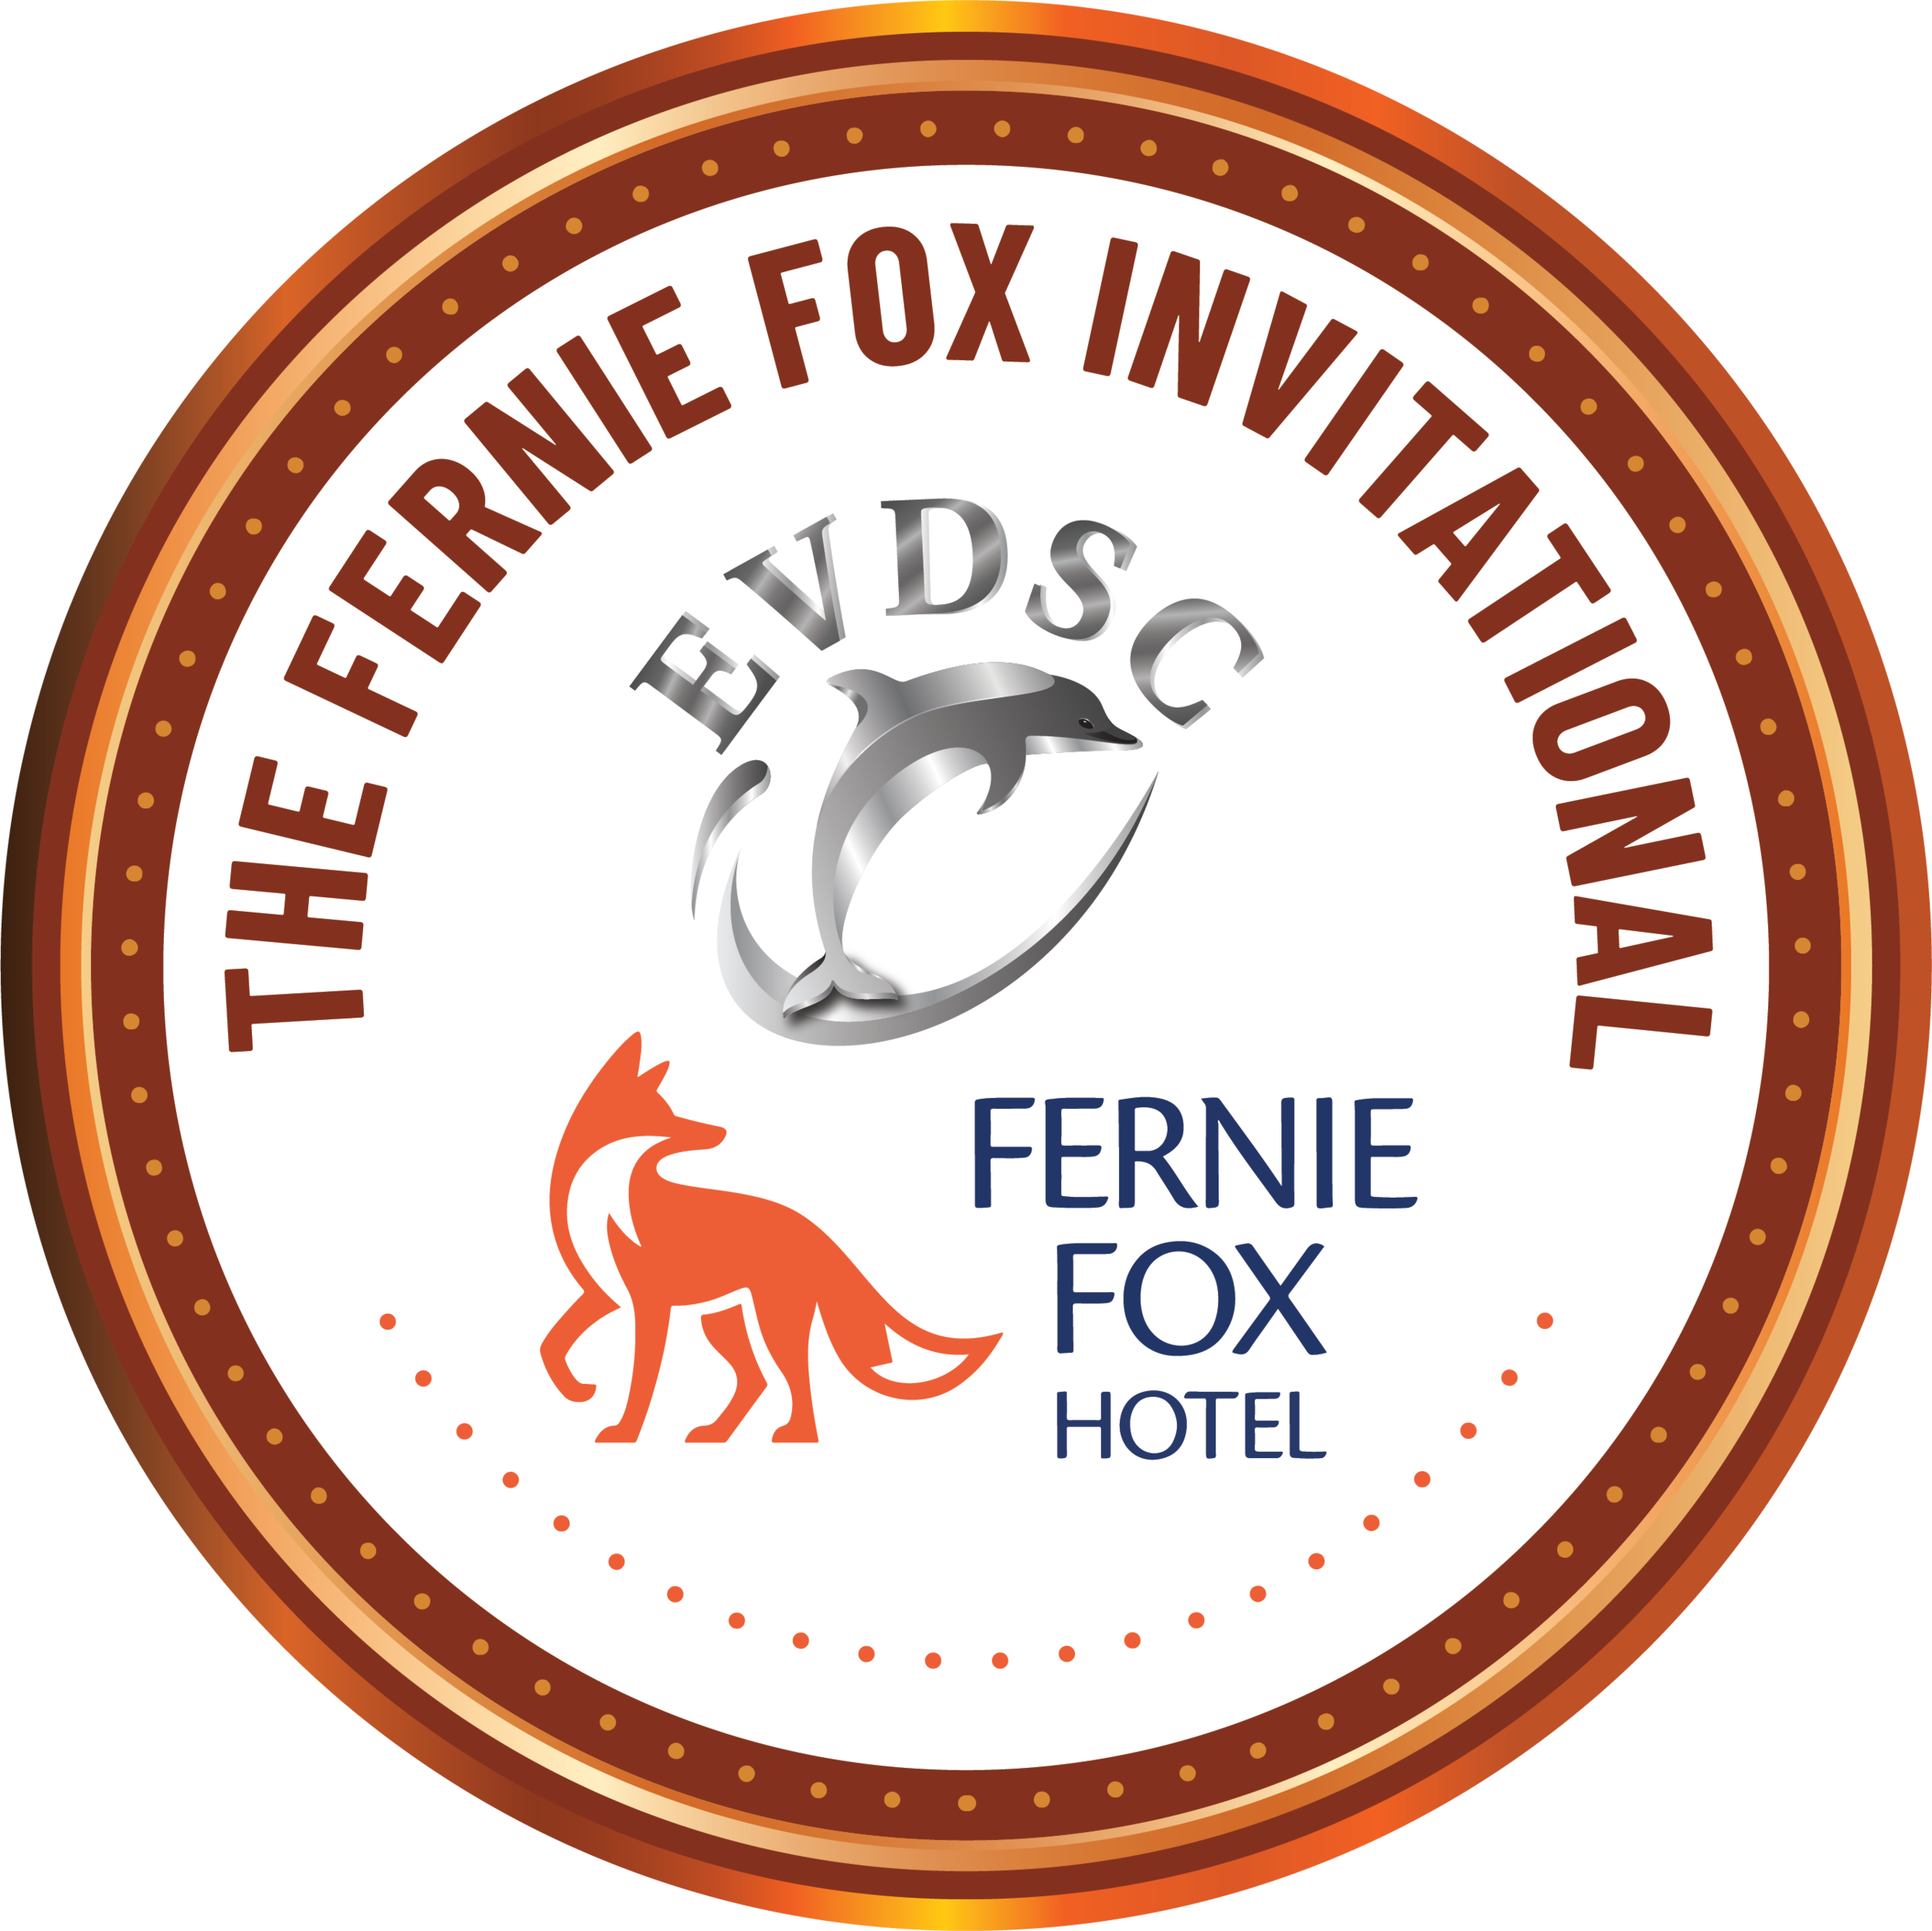 The Fernie Fox Invitational image